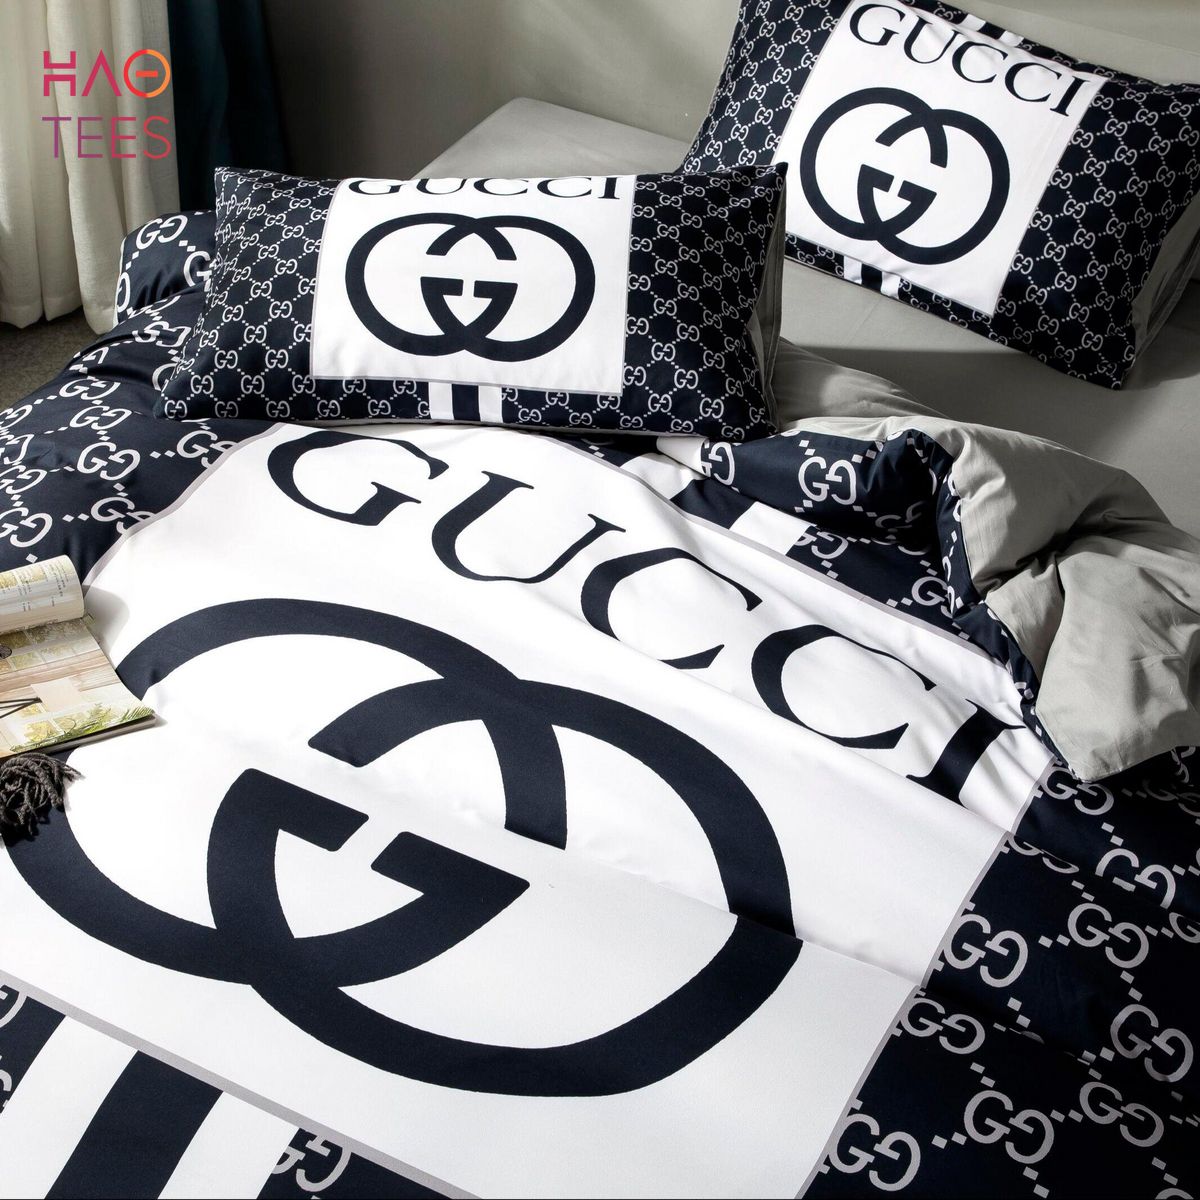 Luxury Louis Vuitton Bedding Set Home Decor - Trends Bedding